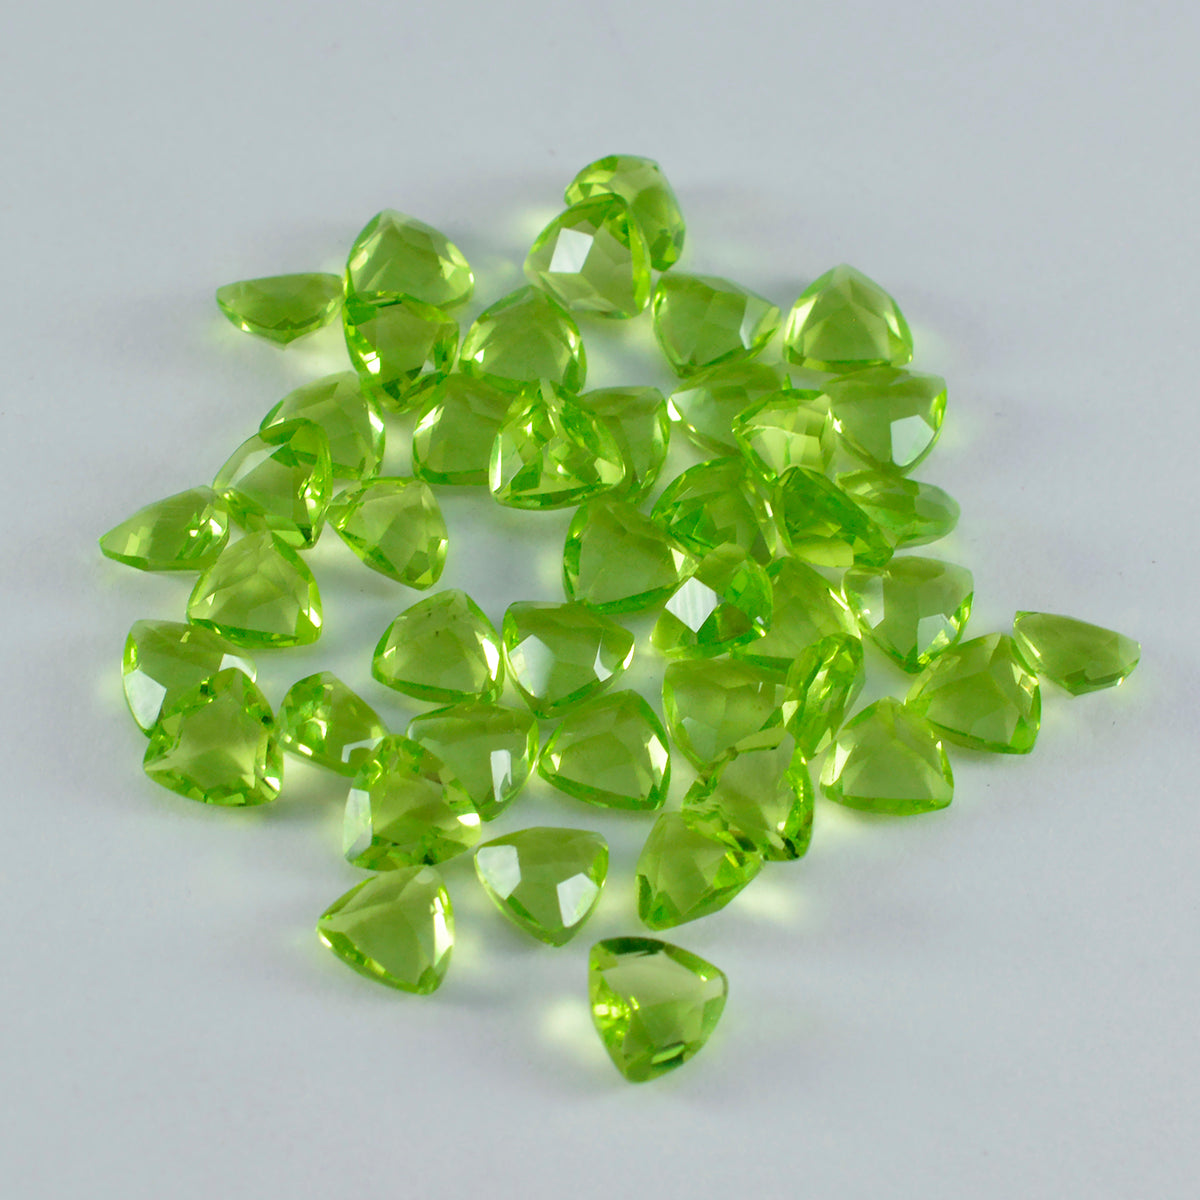 riyogems 1 pezzo di peridoto verde cz sfaccettato da 4x4 mm a forma di trilione, gemma di qualità eccezionale